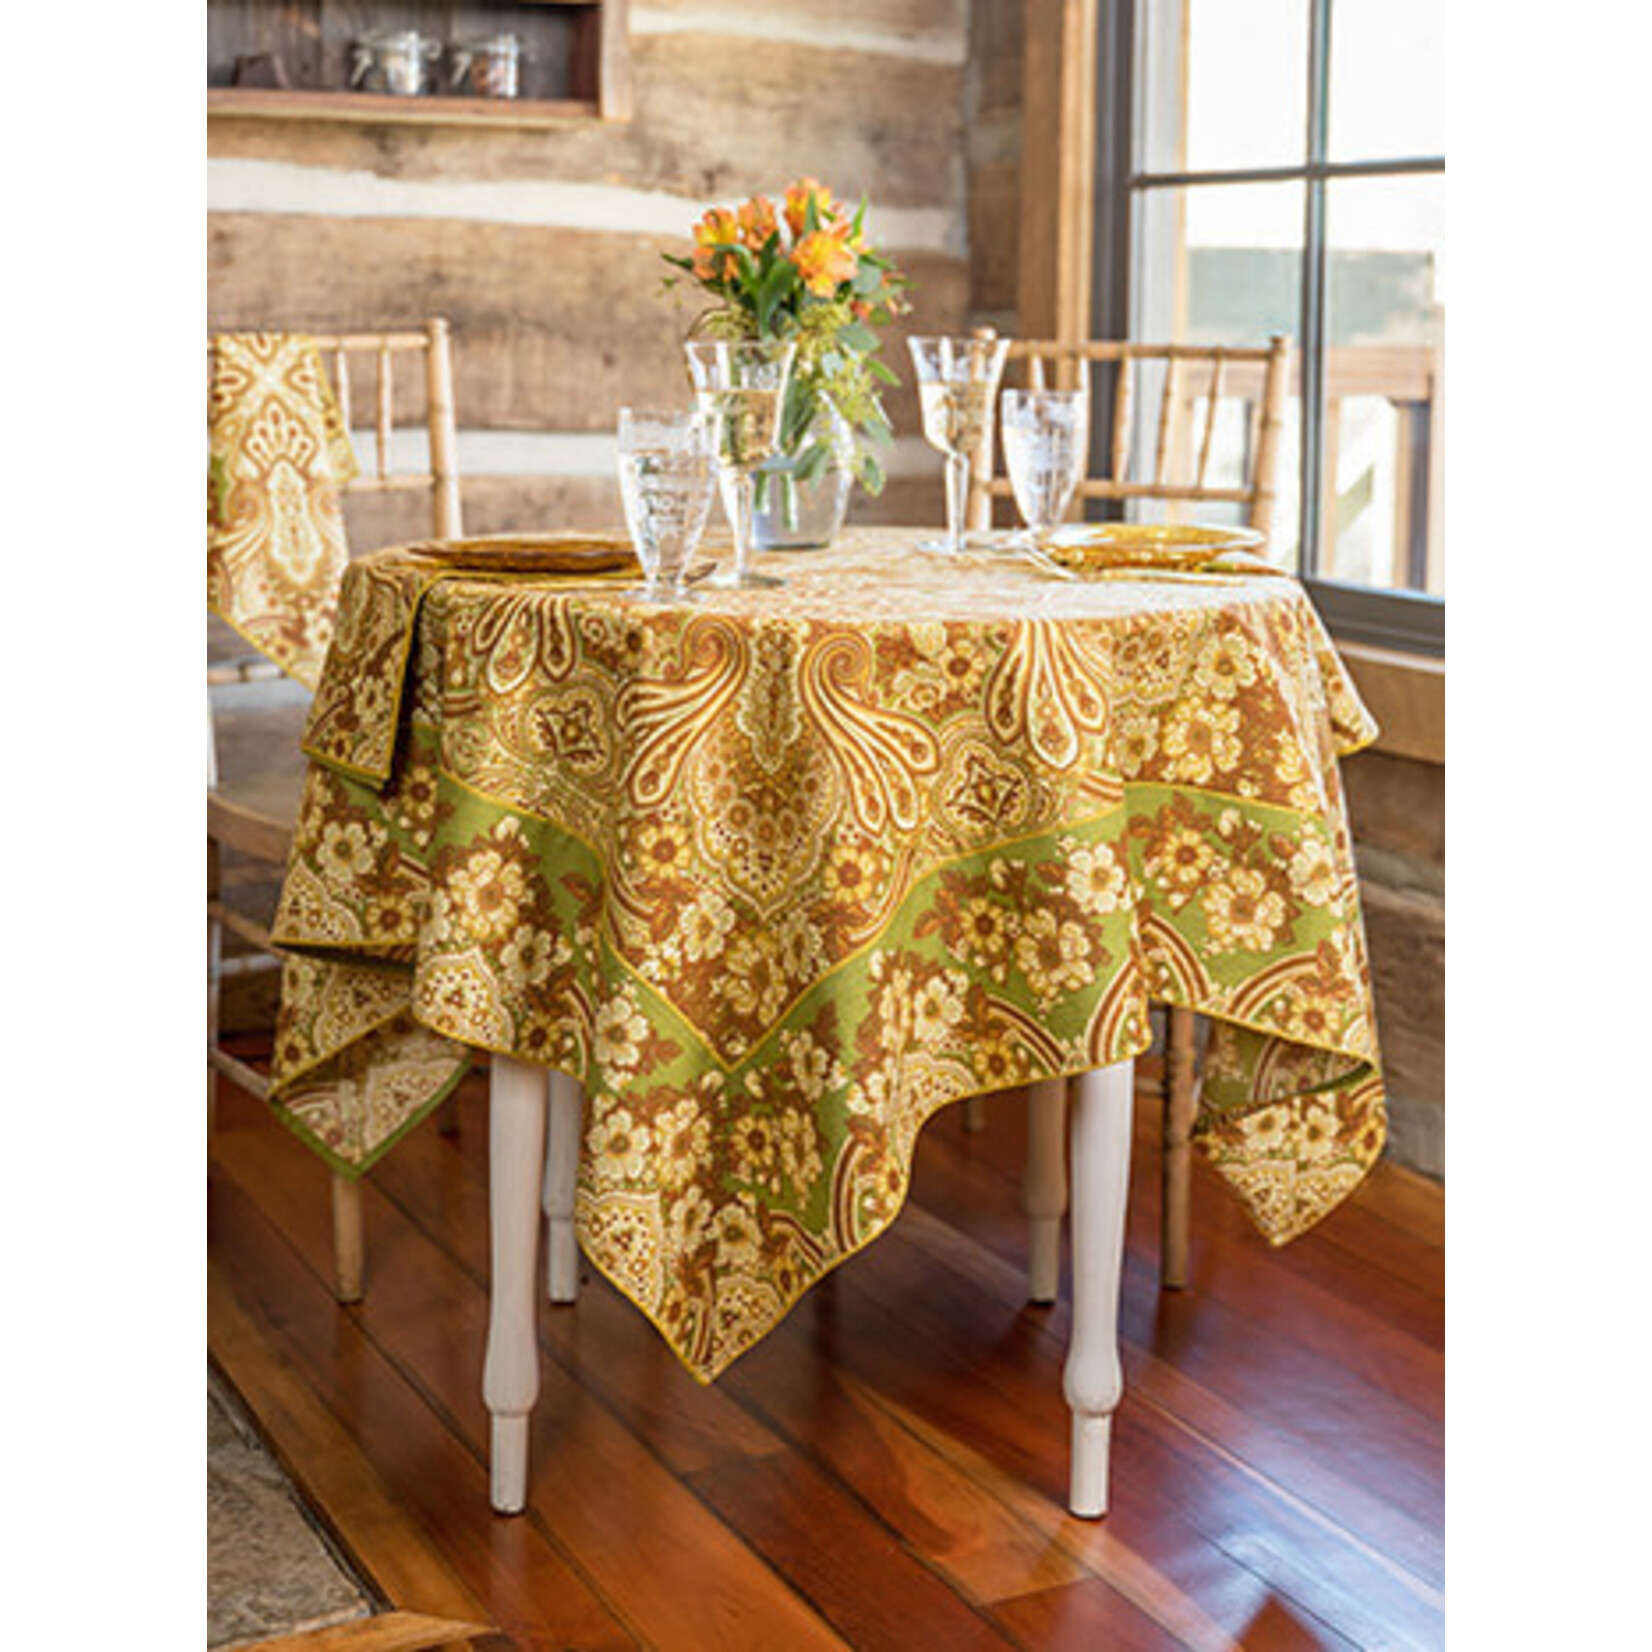 April Cornell Kashmir Paisley Amber Tablecloth  54x54